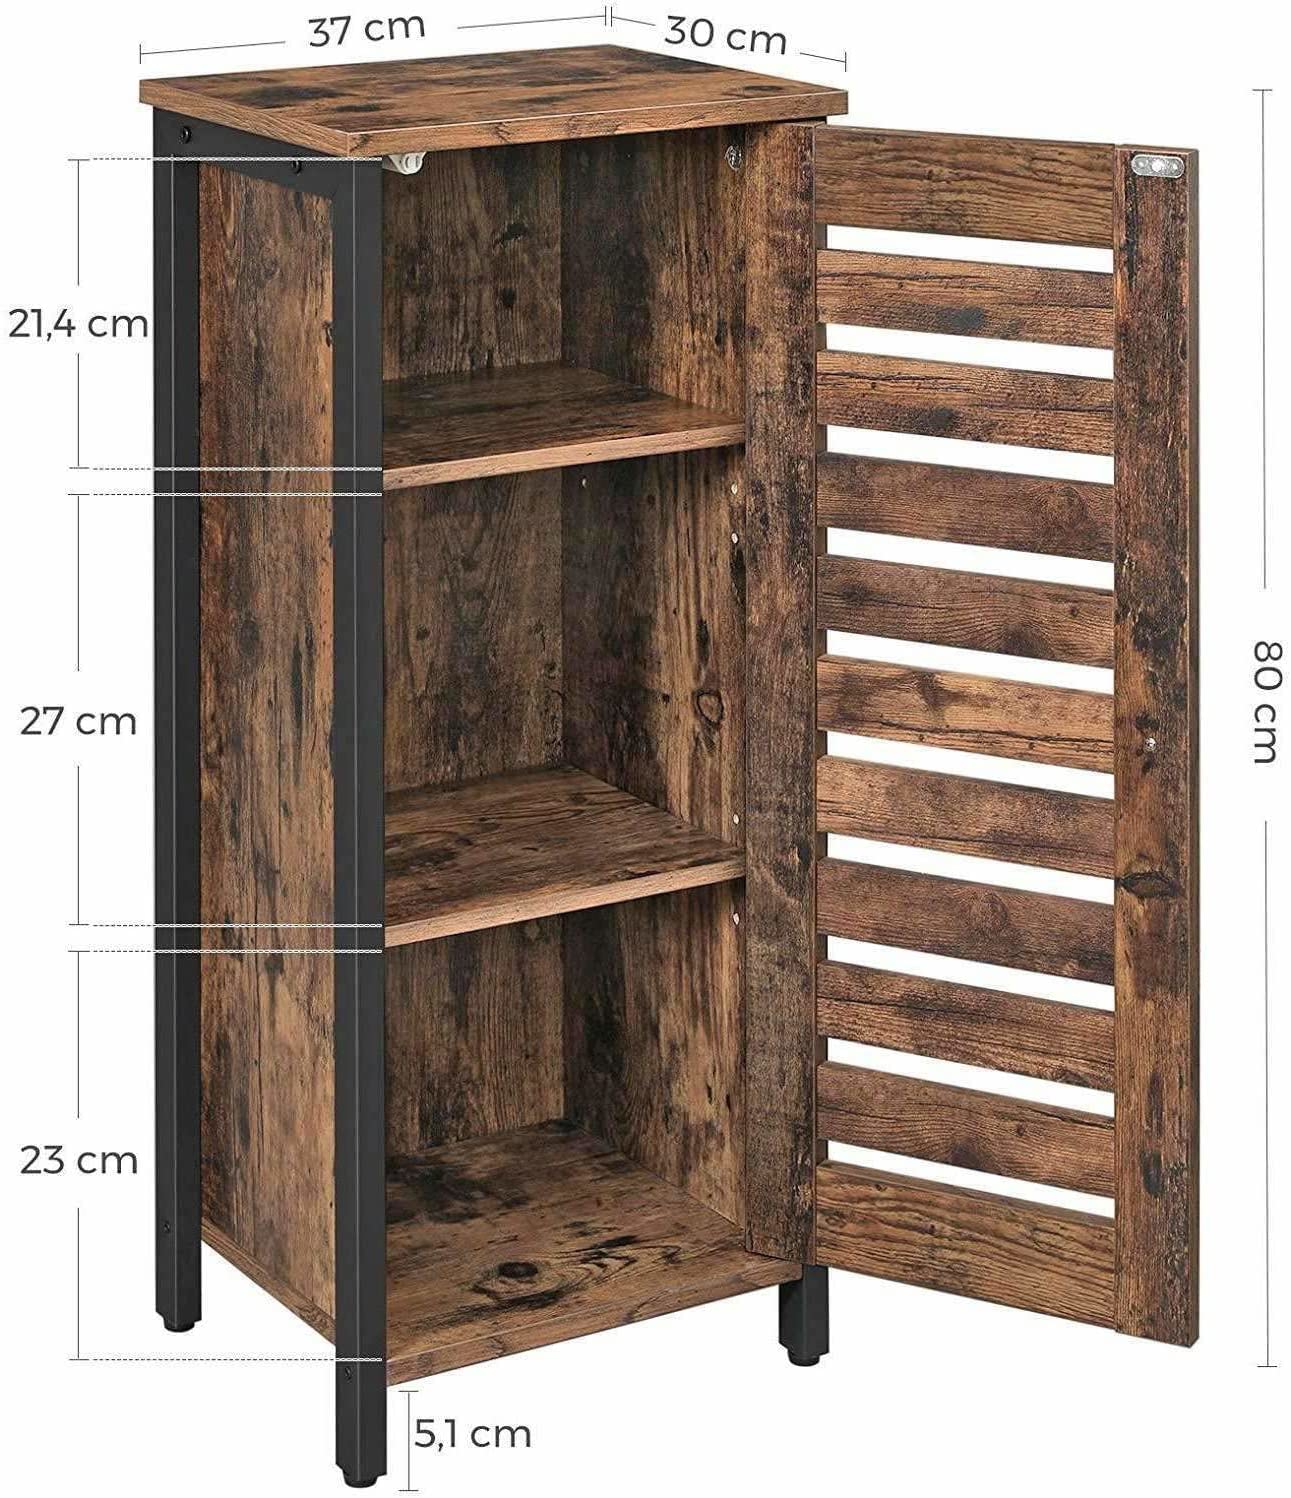 Industrial Style Wood/Steel Nightstand Bedside End Table Bathroom Cabinet Shoe Rack With Shutter Door